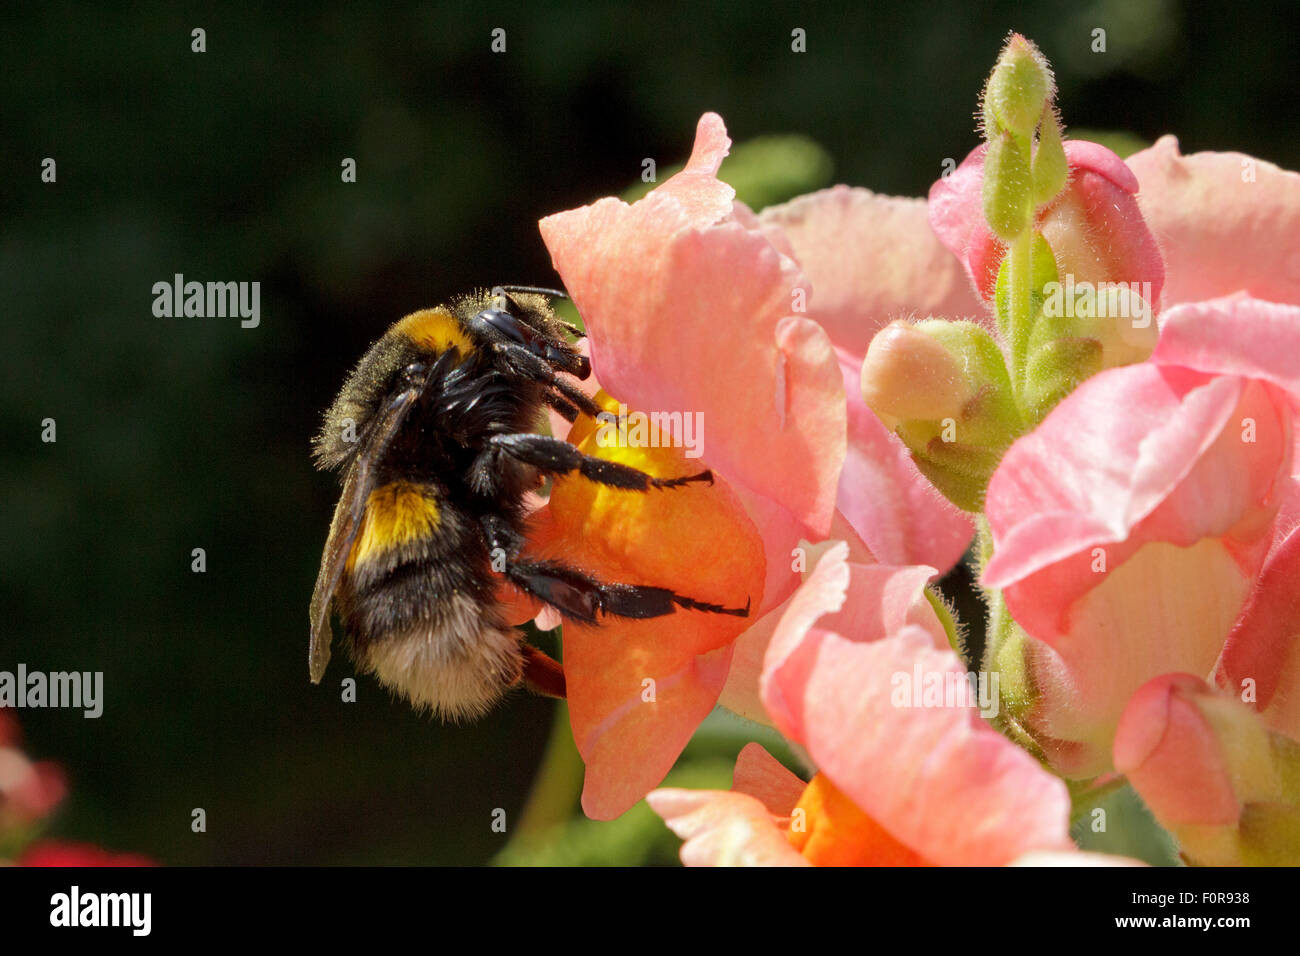 bumblebee on common snapdragon (Antirrhinum majus) Stock Photo